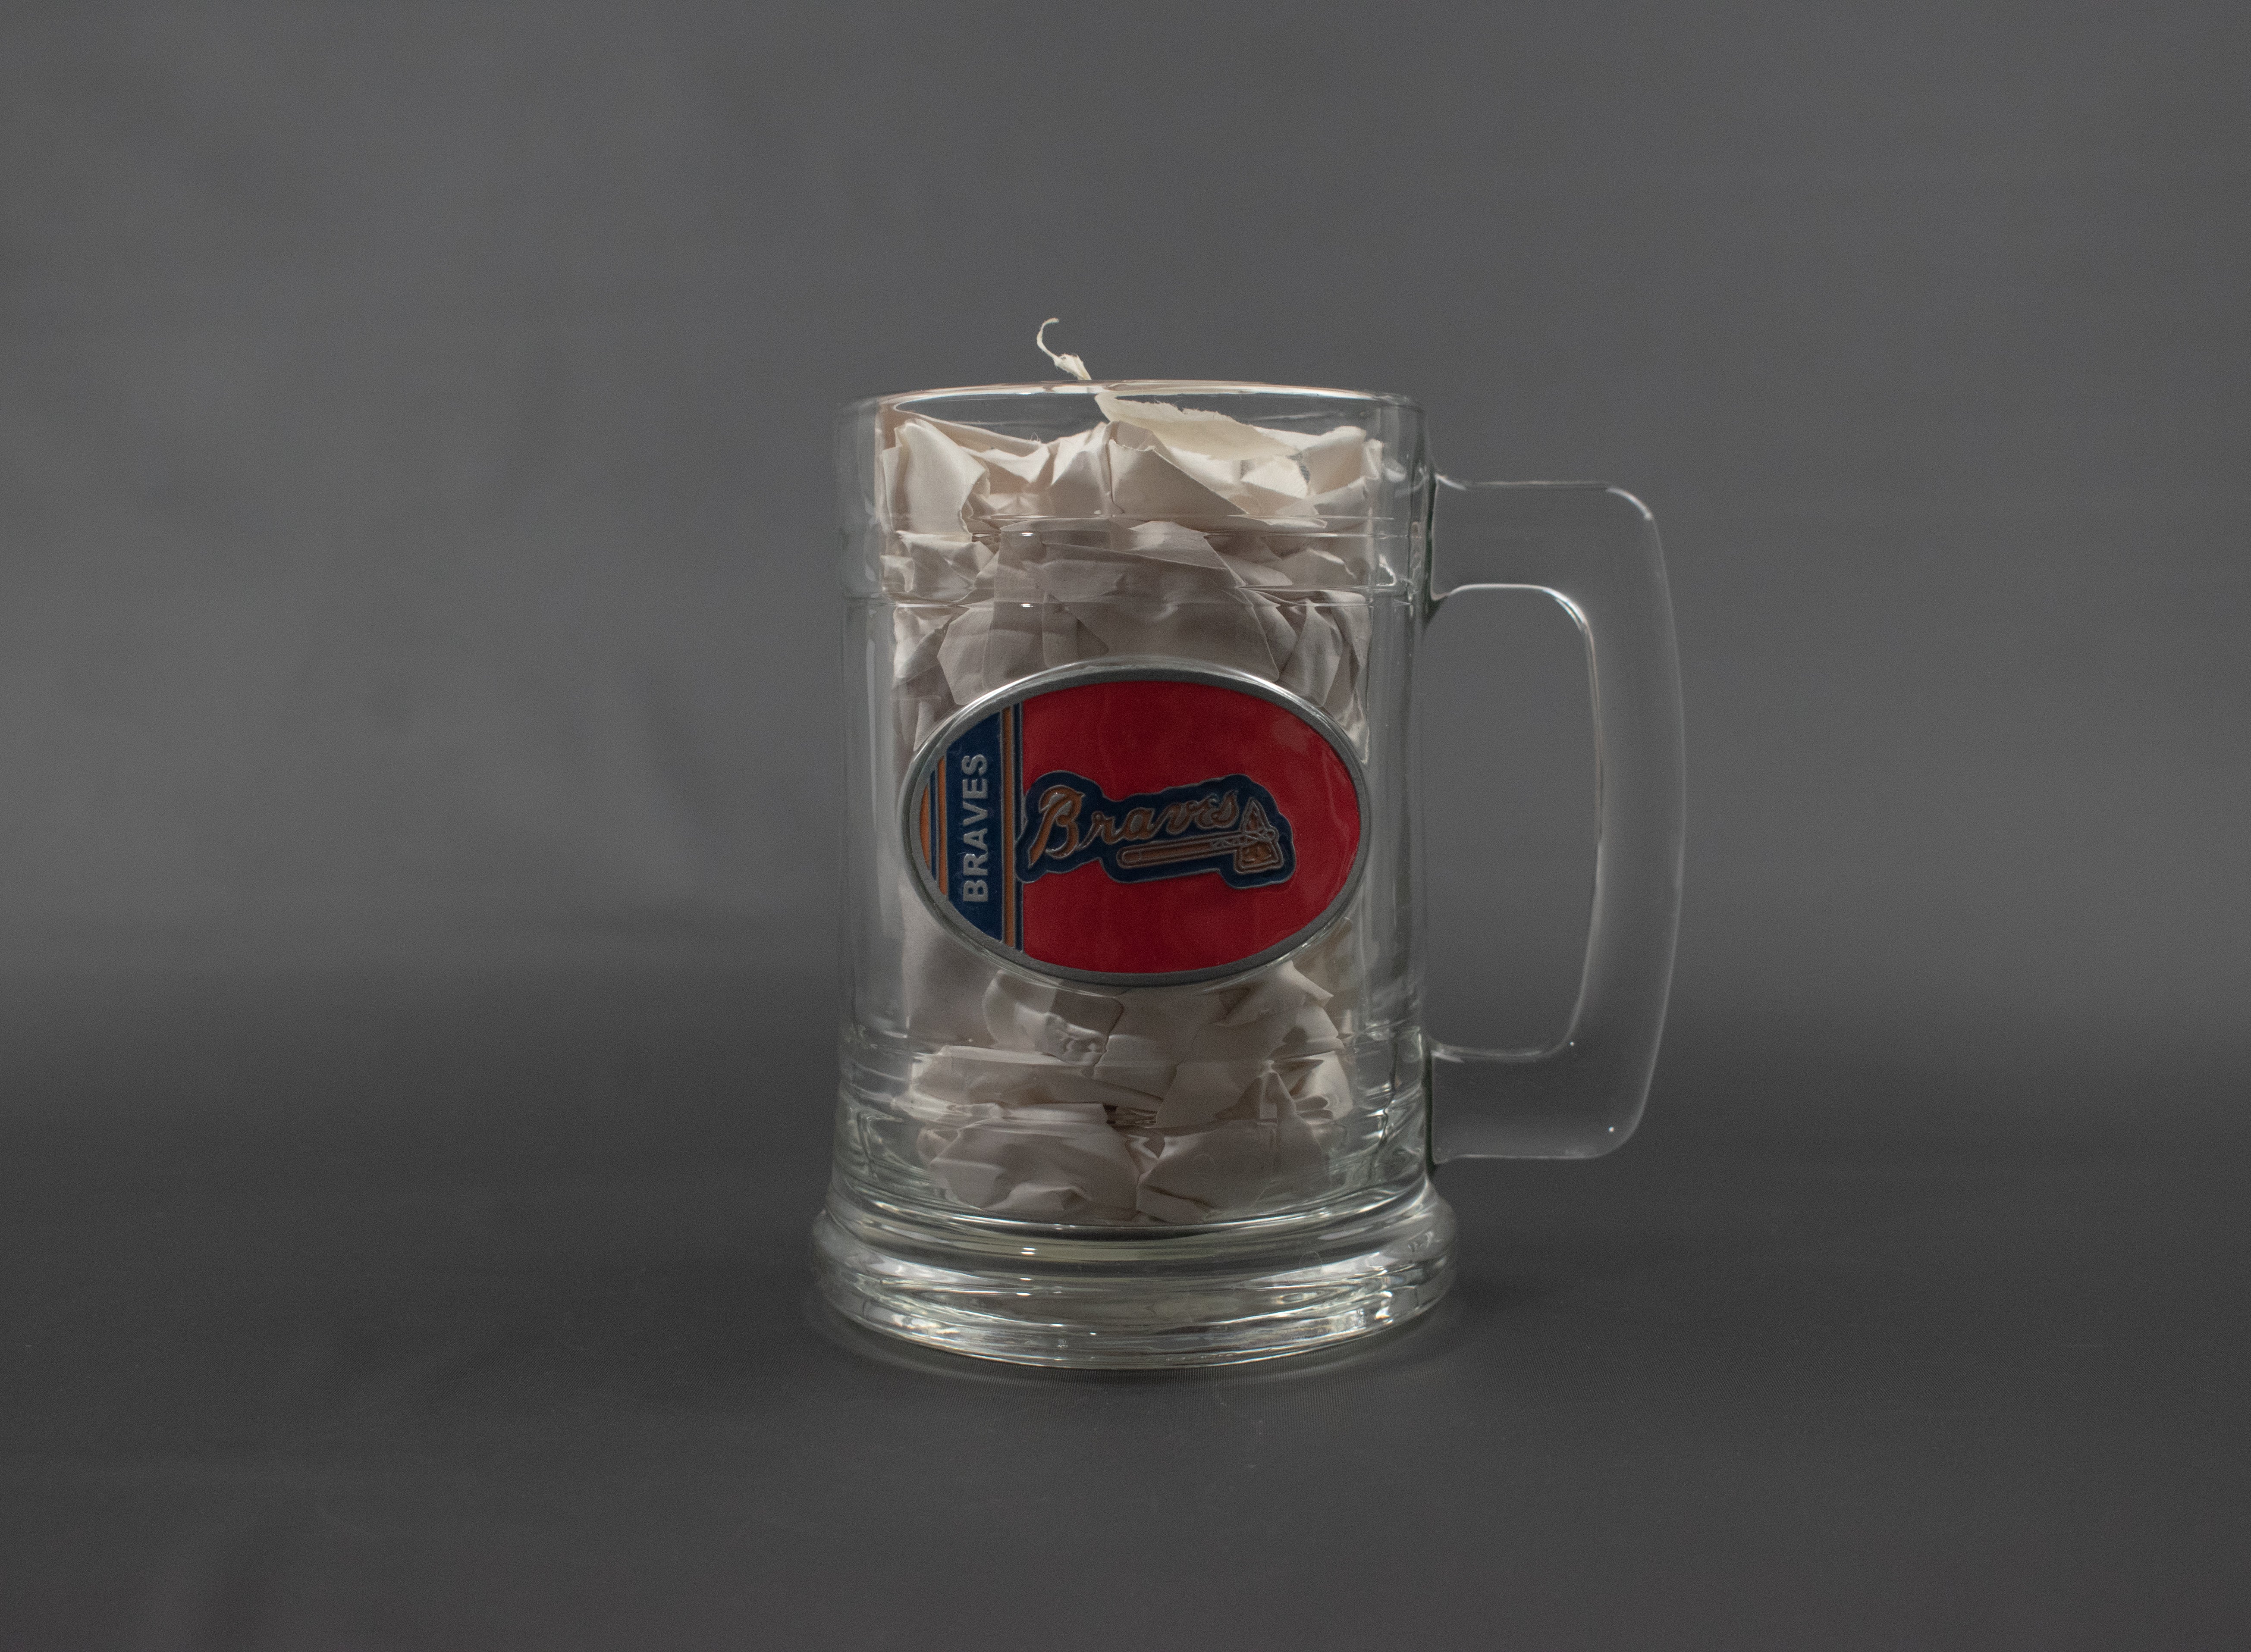 Atlanta Braves MLB Beer Mug Glass Collectible Cup Used 5 1/2 Inch tall